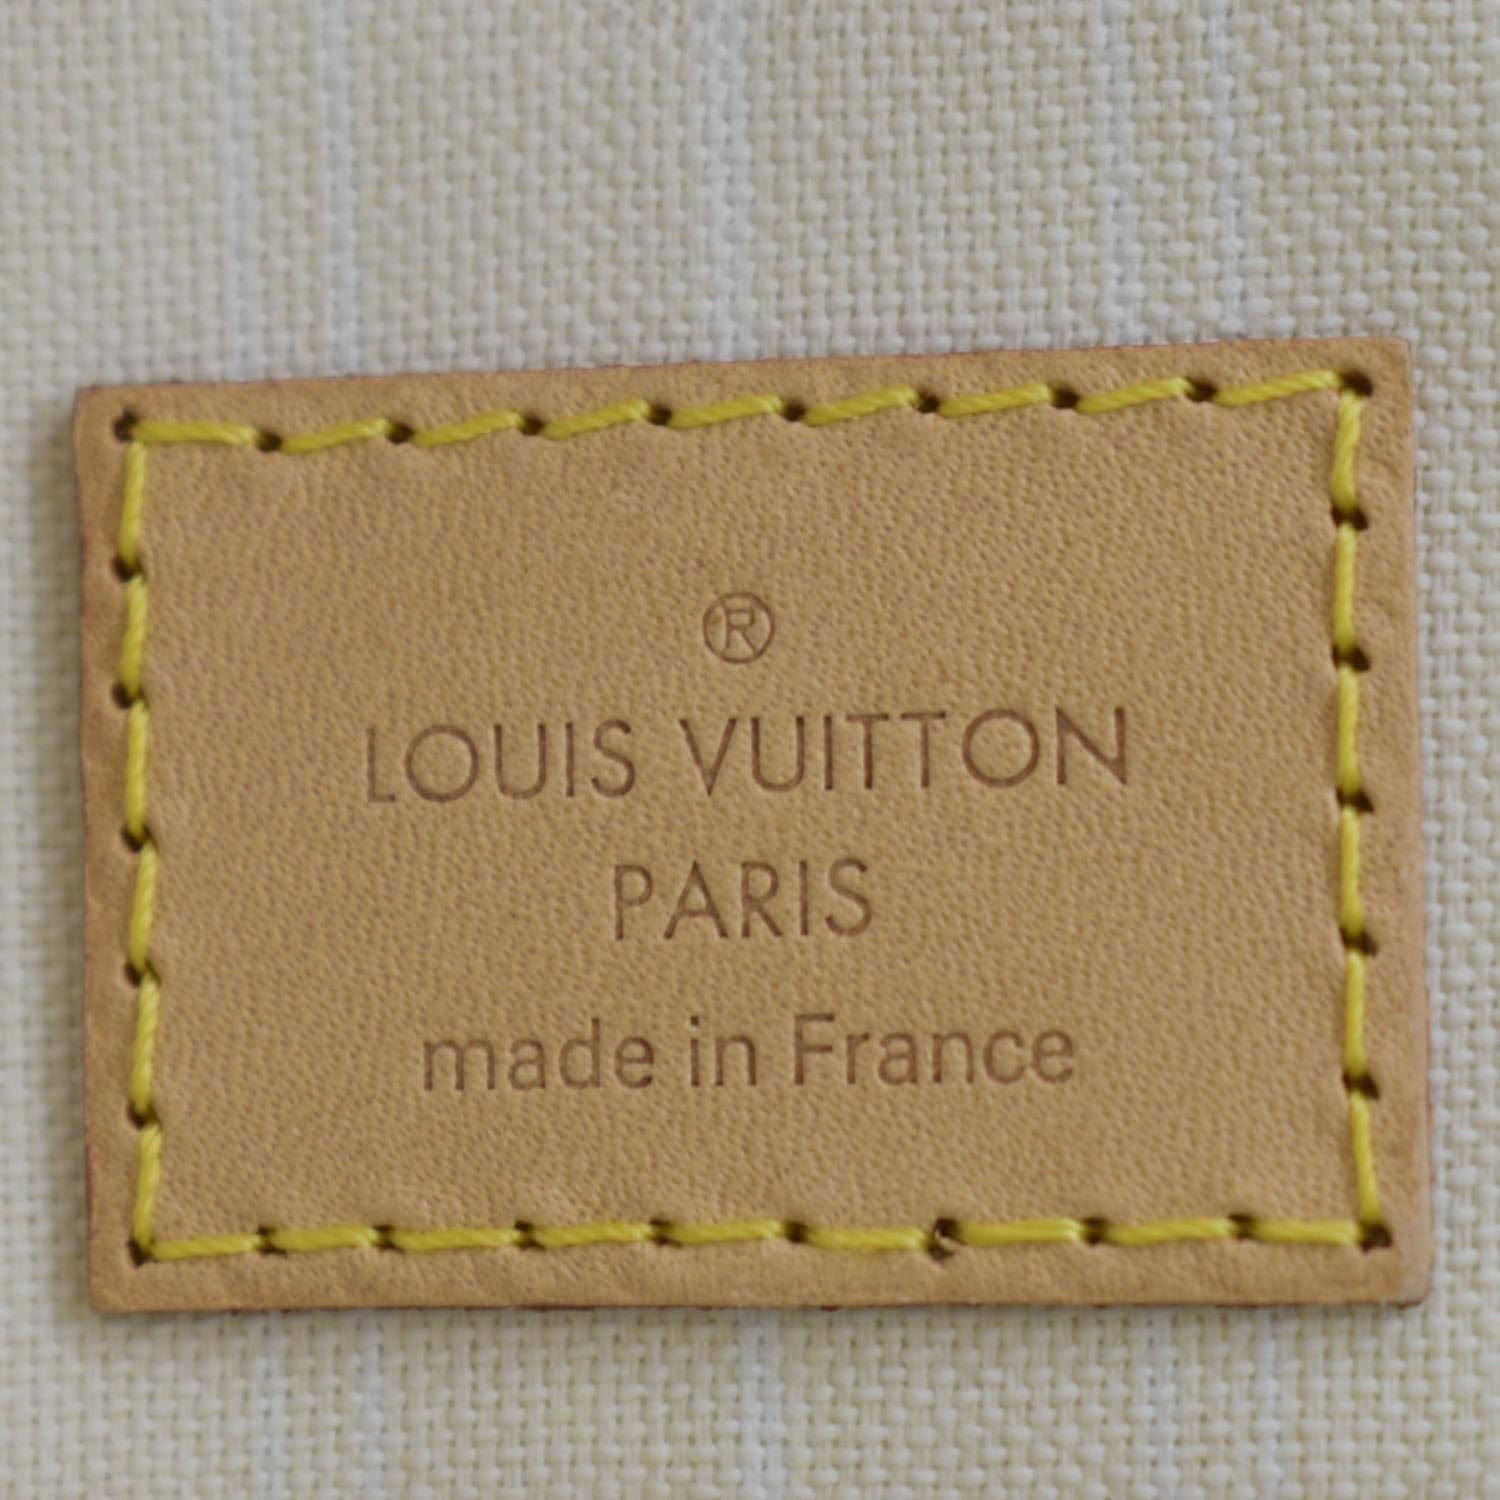 Louis Vuitton OnTheGo PM Tote Bag M46424 Blue Infinity Dot Shoulder Purse  LV x Y